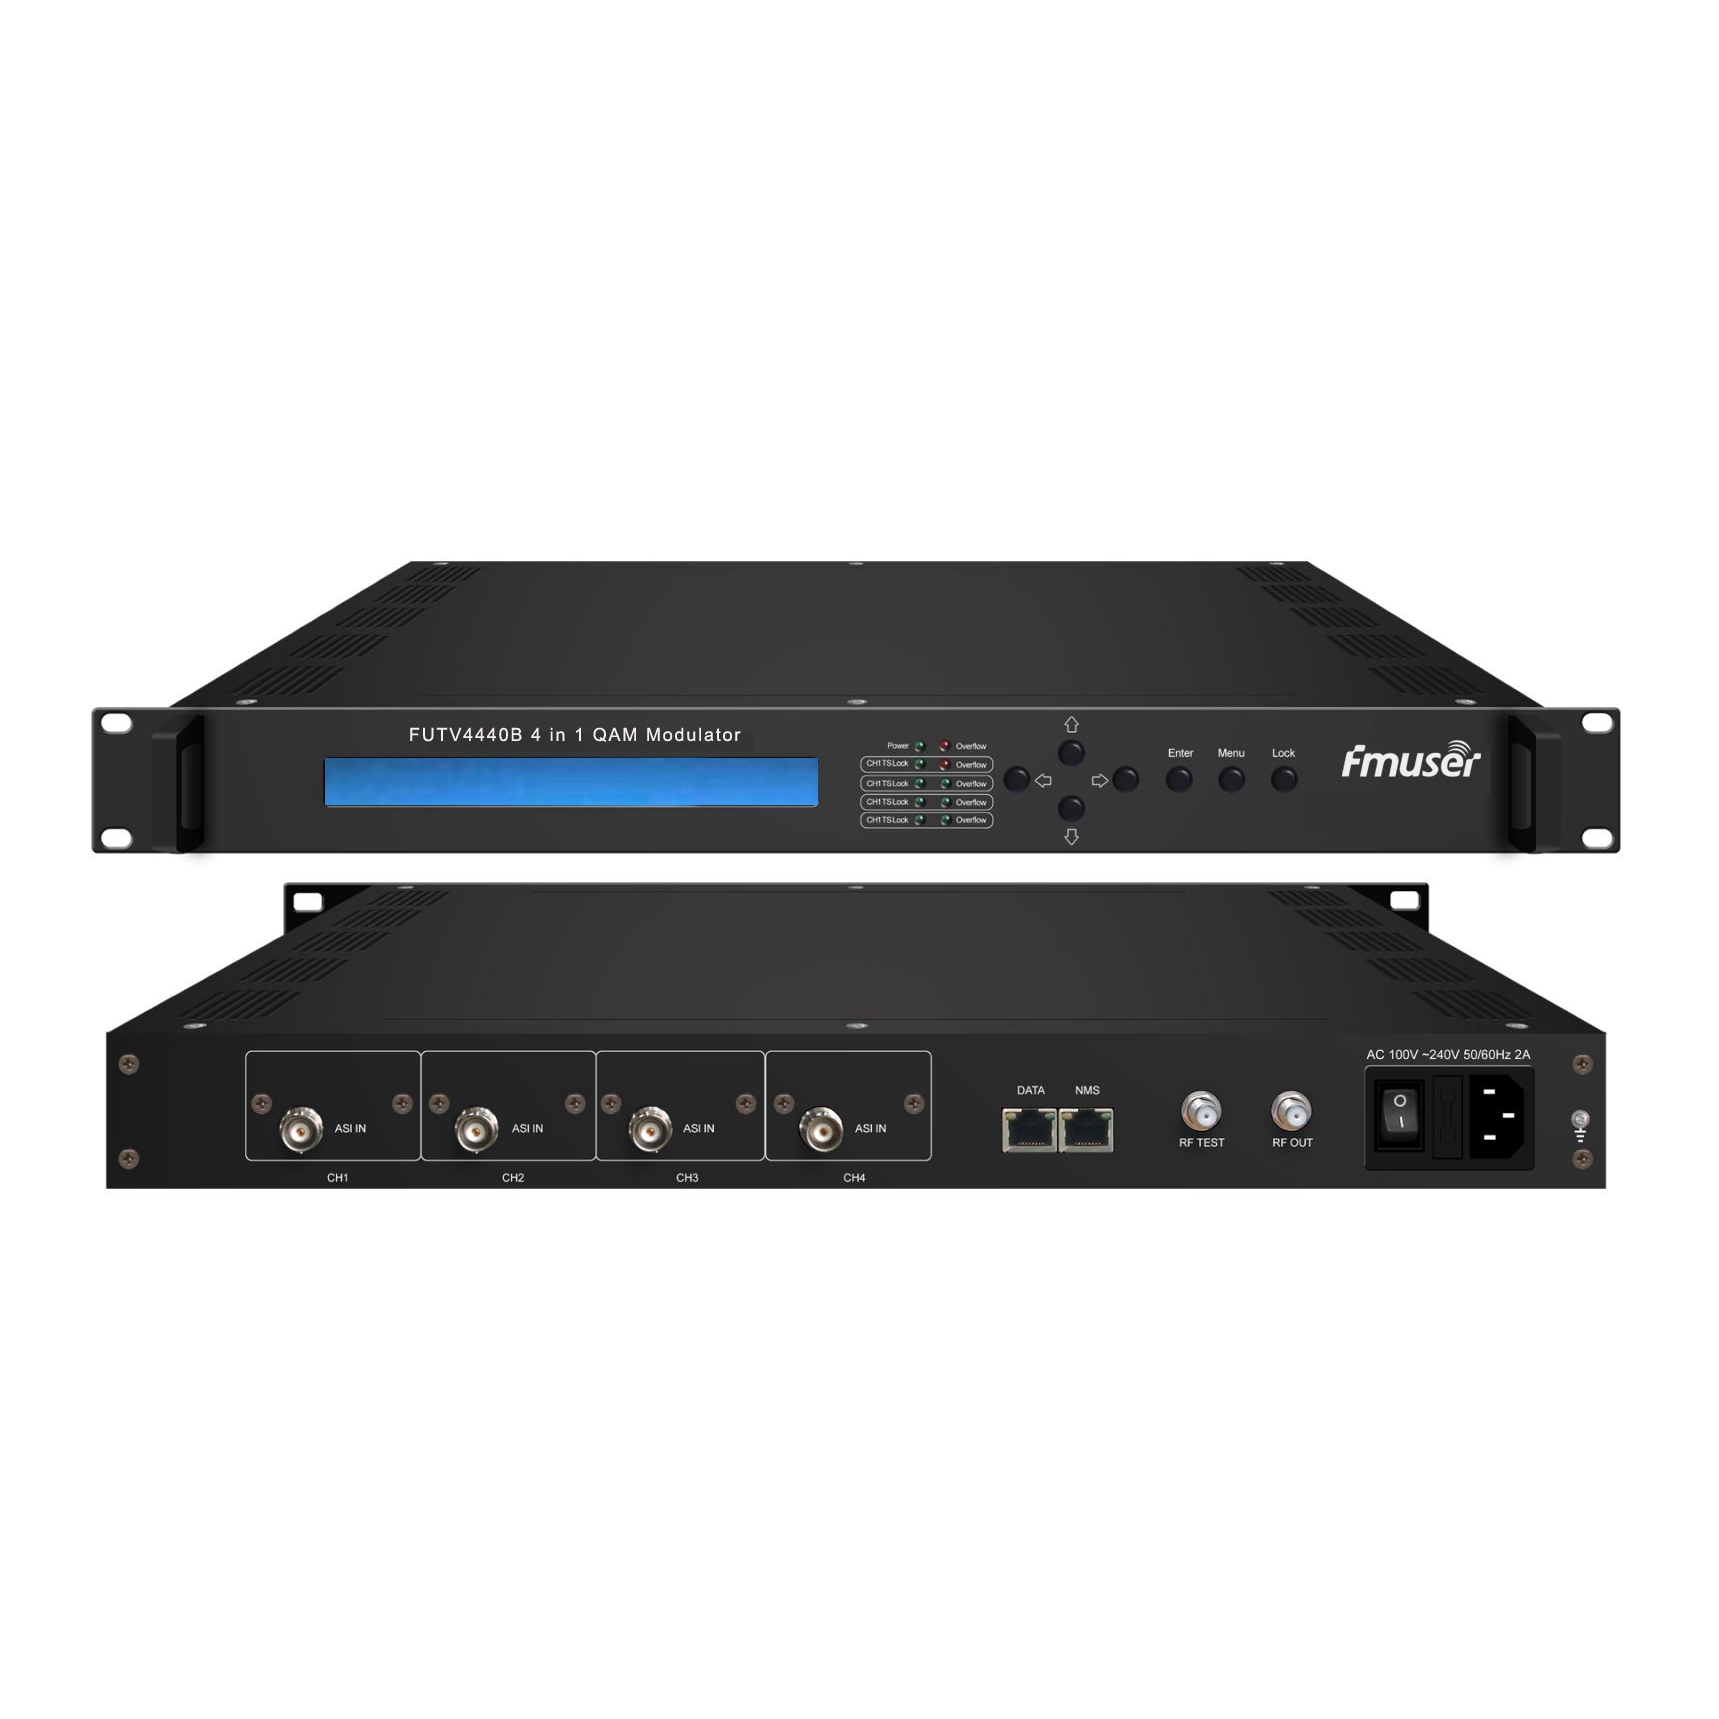 FMUSER FUTV4440B 4 in 1 QAM Modulator (Optional 4*ASI / 4*QAM / 4*DVB-S tuner / 4*DVB-S2 tuner Input, RF Output ) with Network management